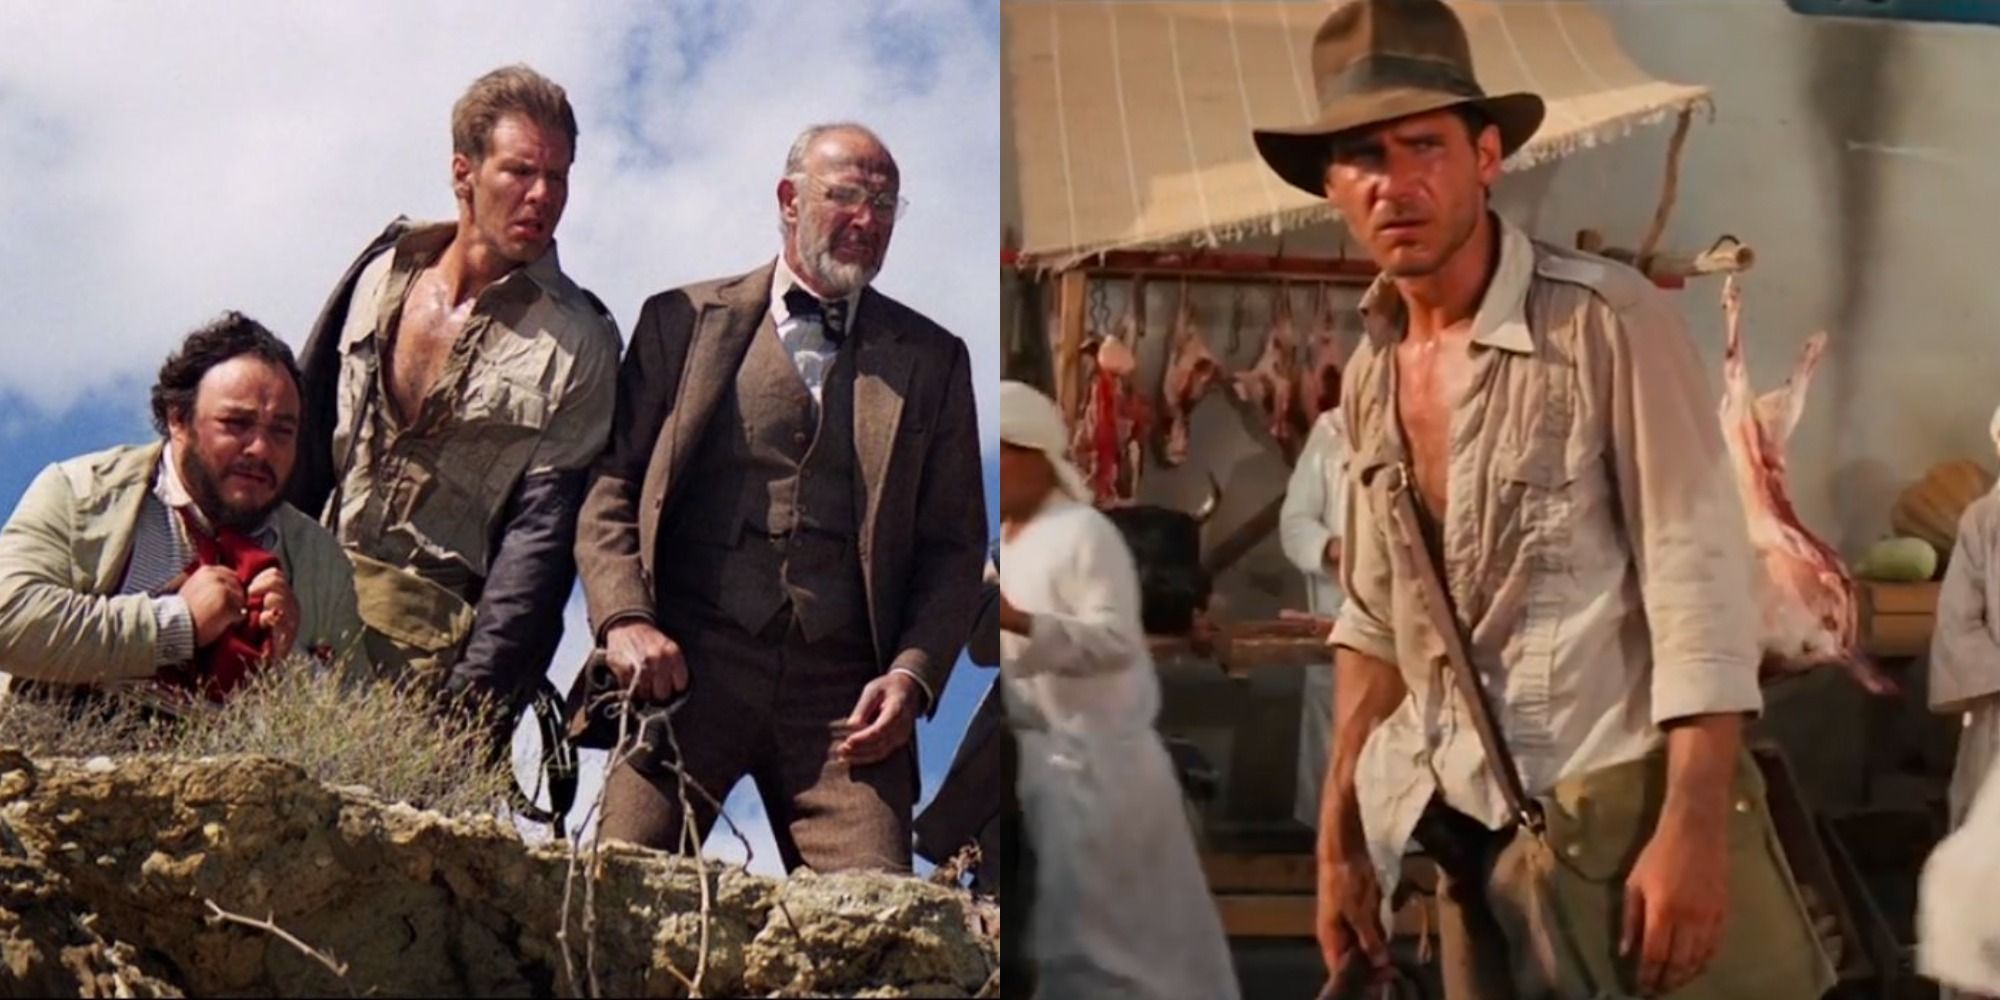 Indiana-Jones-Franchise-Cliff-Scene-Last-Crusade-Swordsman-Scene-Raider-of-the-Lost-Ark